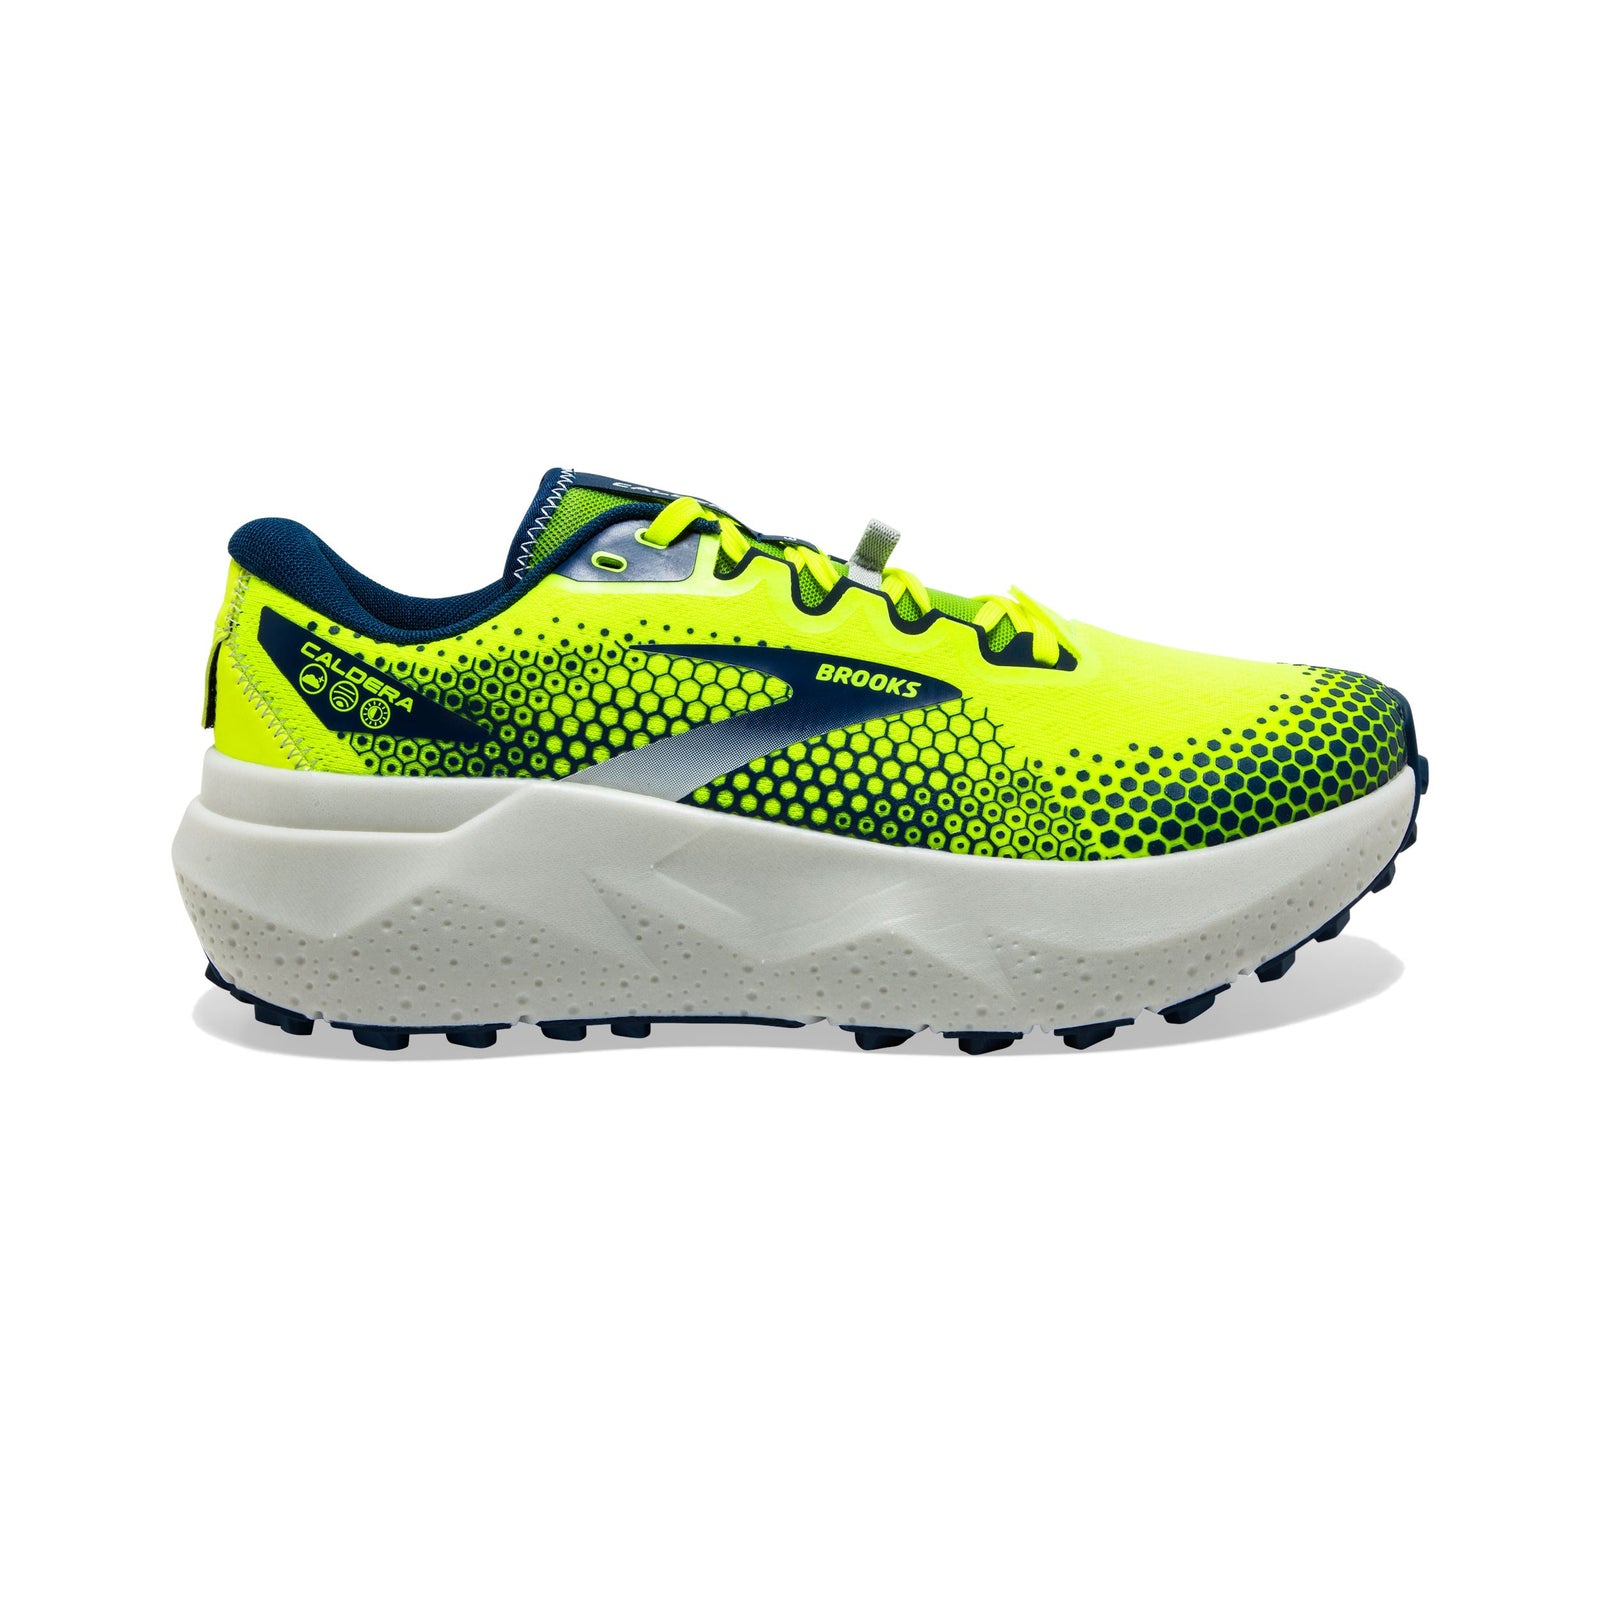 Brooks Men's Caldera 6 Trail Running Shoes Nightlife/Titan/Oyster Mushroom US 7.5 